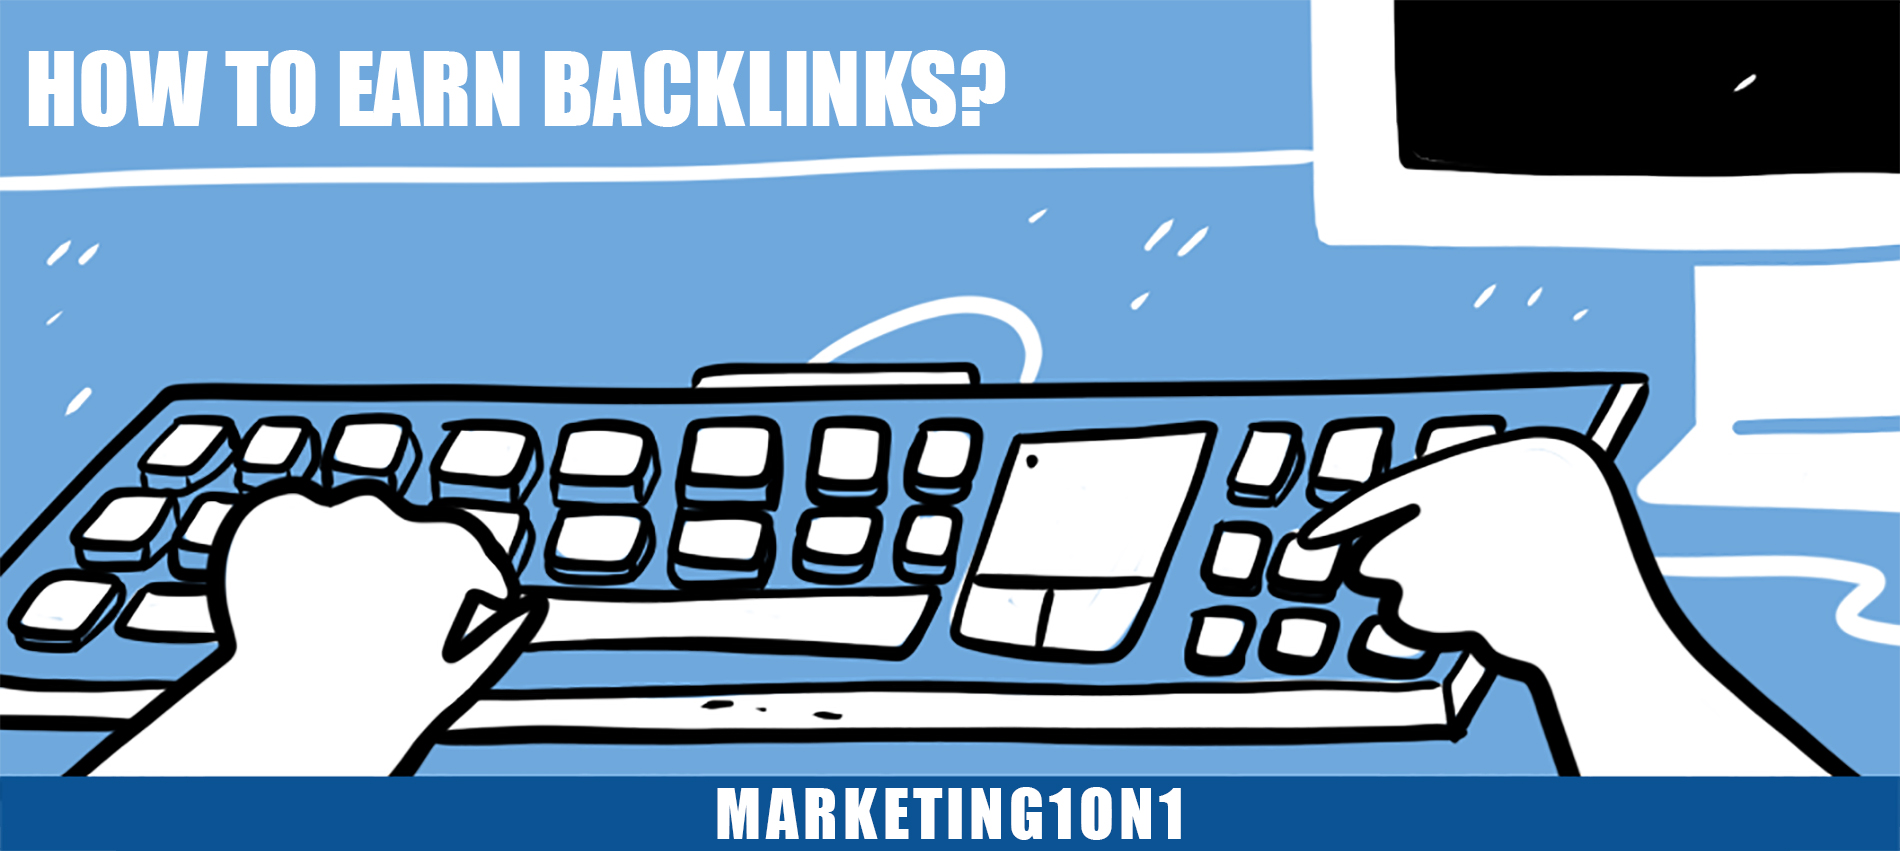 How to earn backlinks?